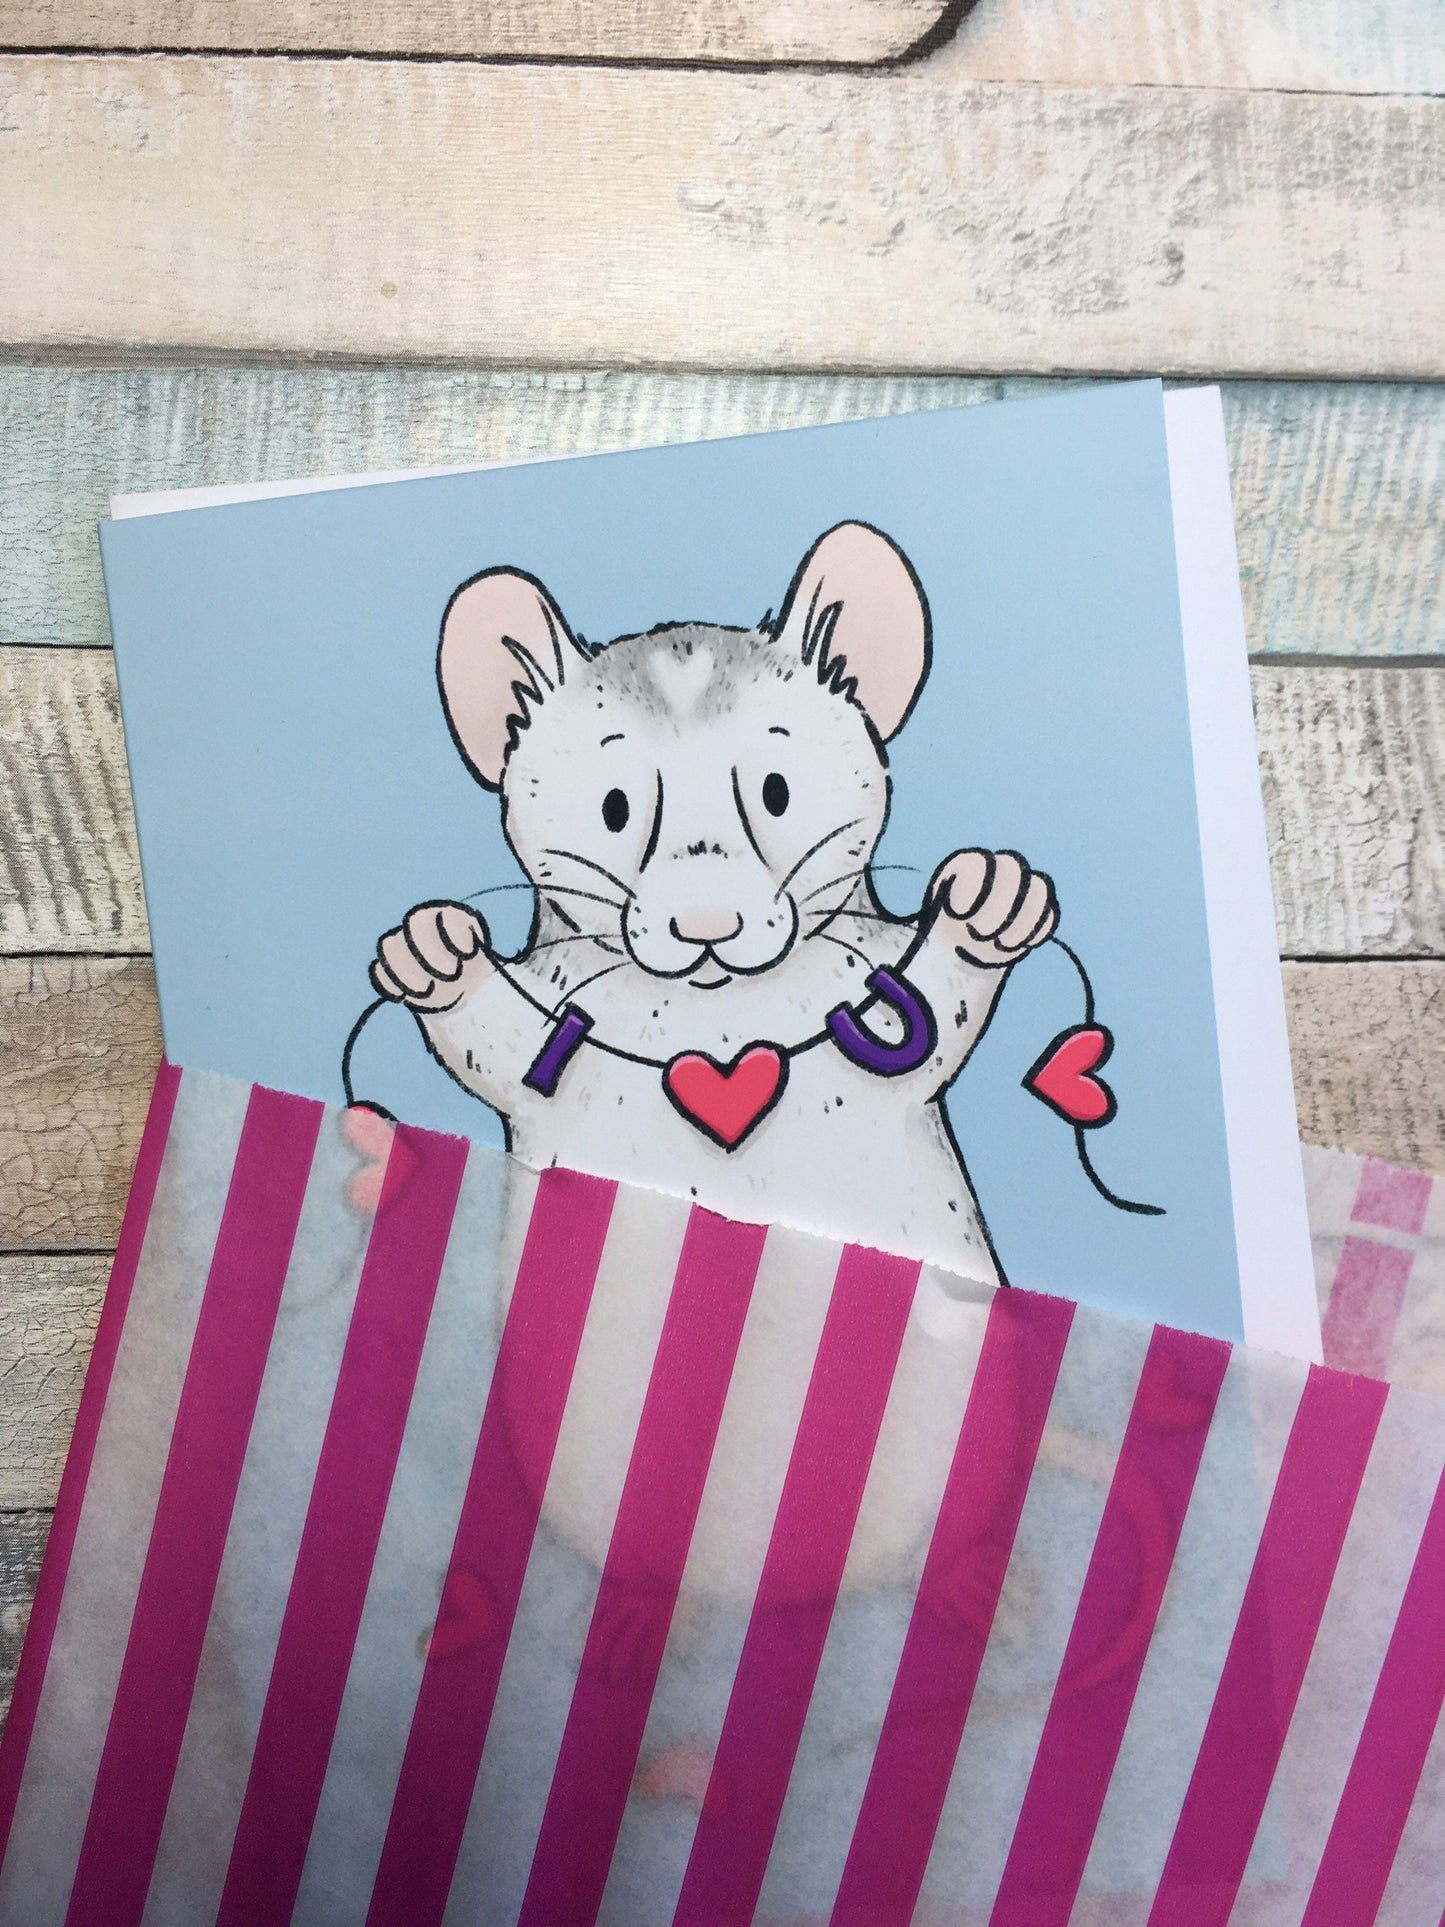 I Love You Rat A6 Greeting Card - Cute Roan Rat Blank Greeting Card - Ratty Love Card - Rat Valentine